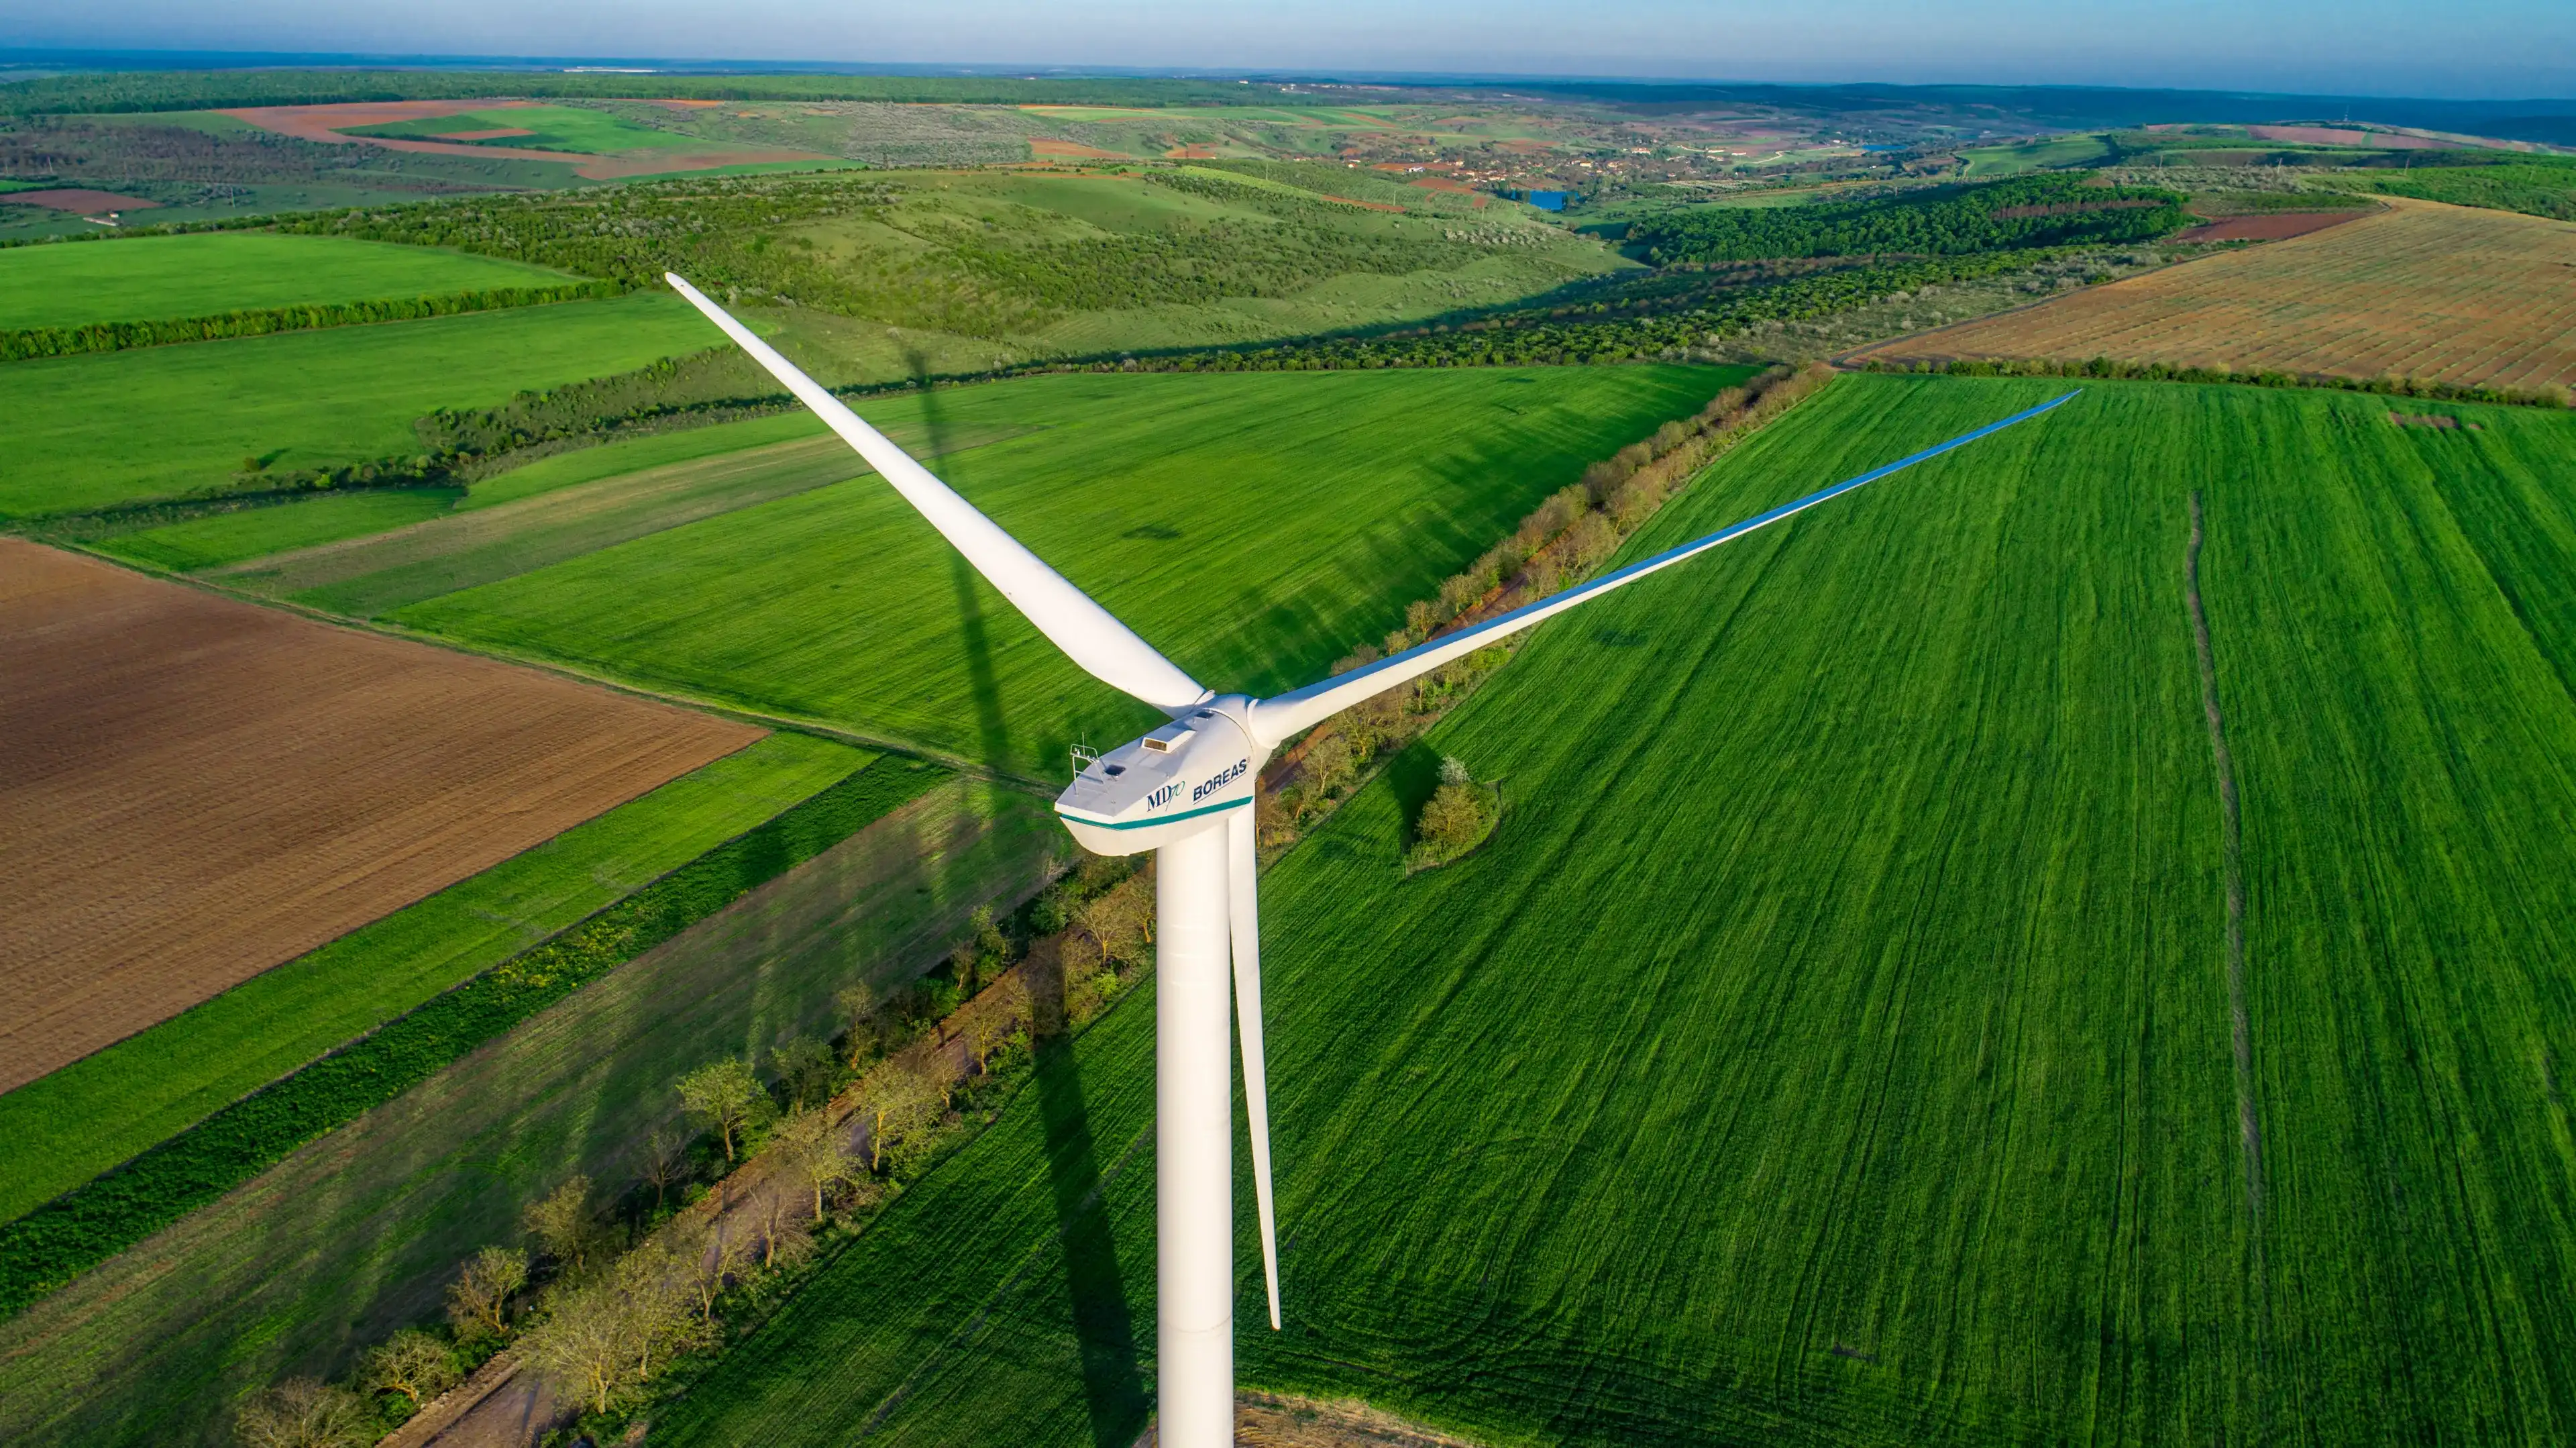 Busauca, Rezina / Moldova - april 30 2018: Boreas MD 70 wind turbine in green fields shot with a drone 